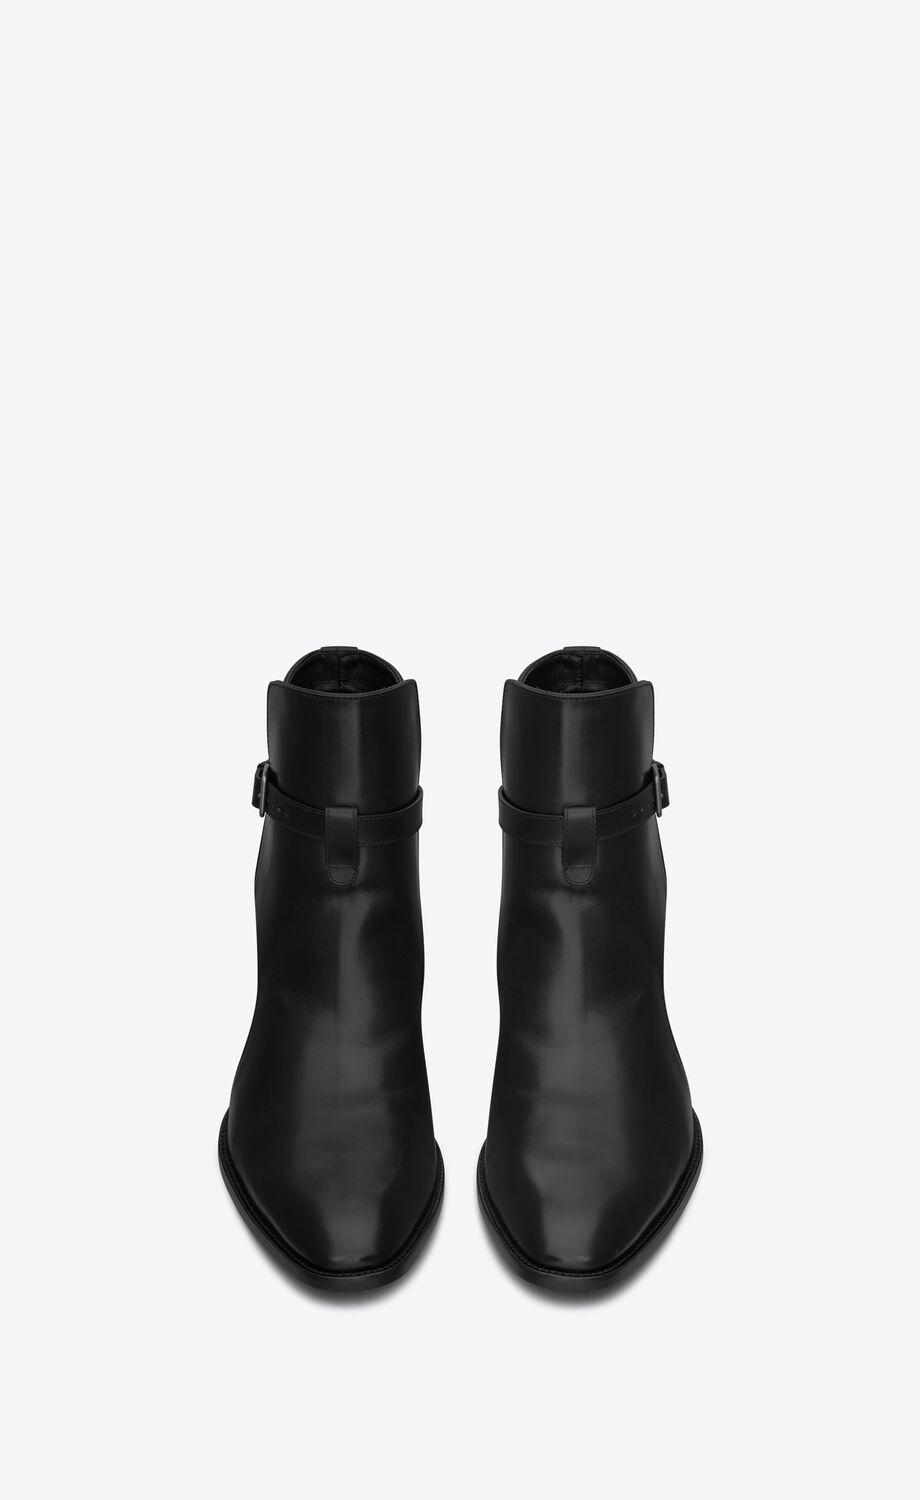 Wyatt jodhpur boots in smooth leather | Saint Laurent | YSL.com